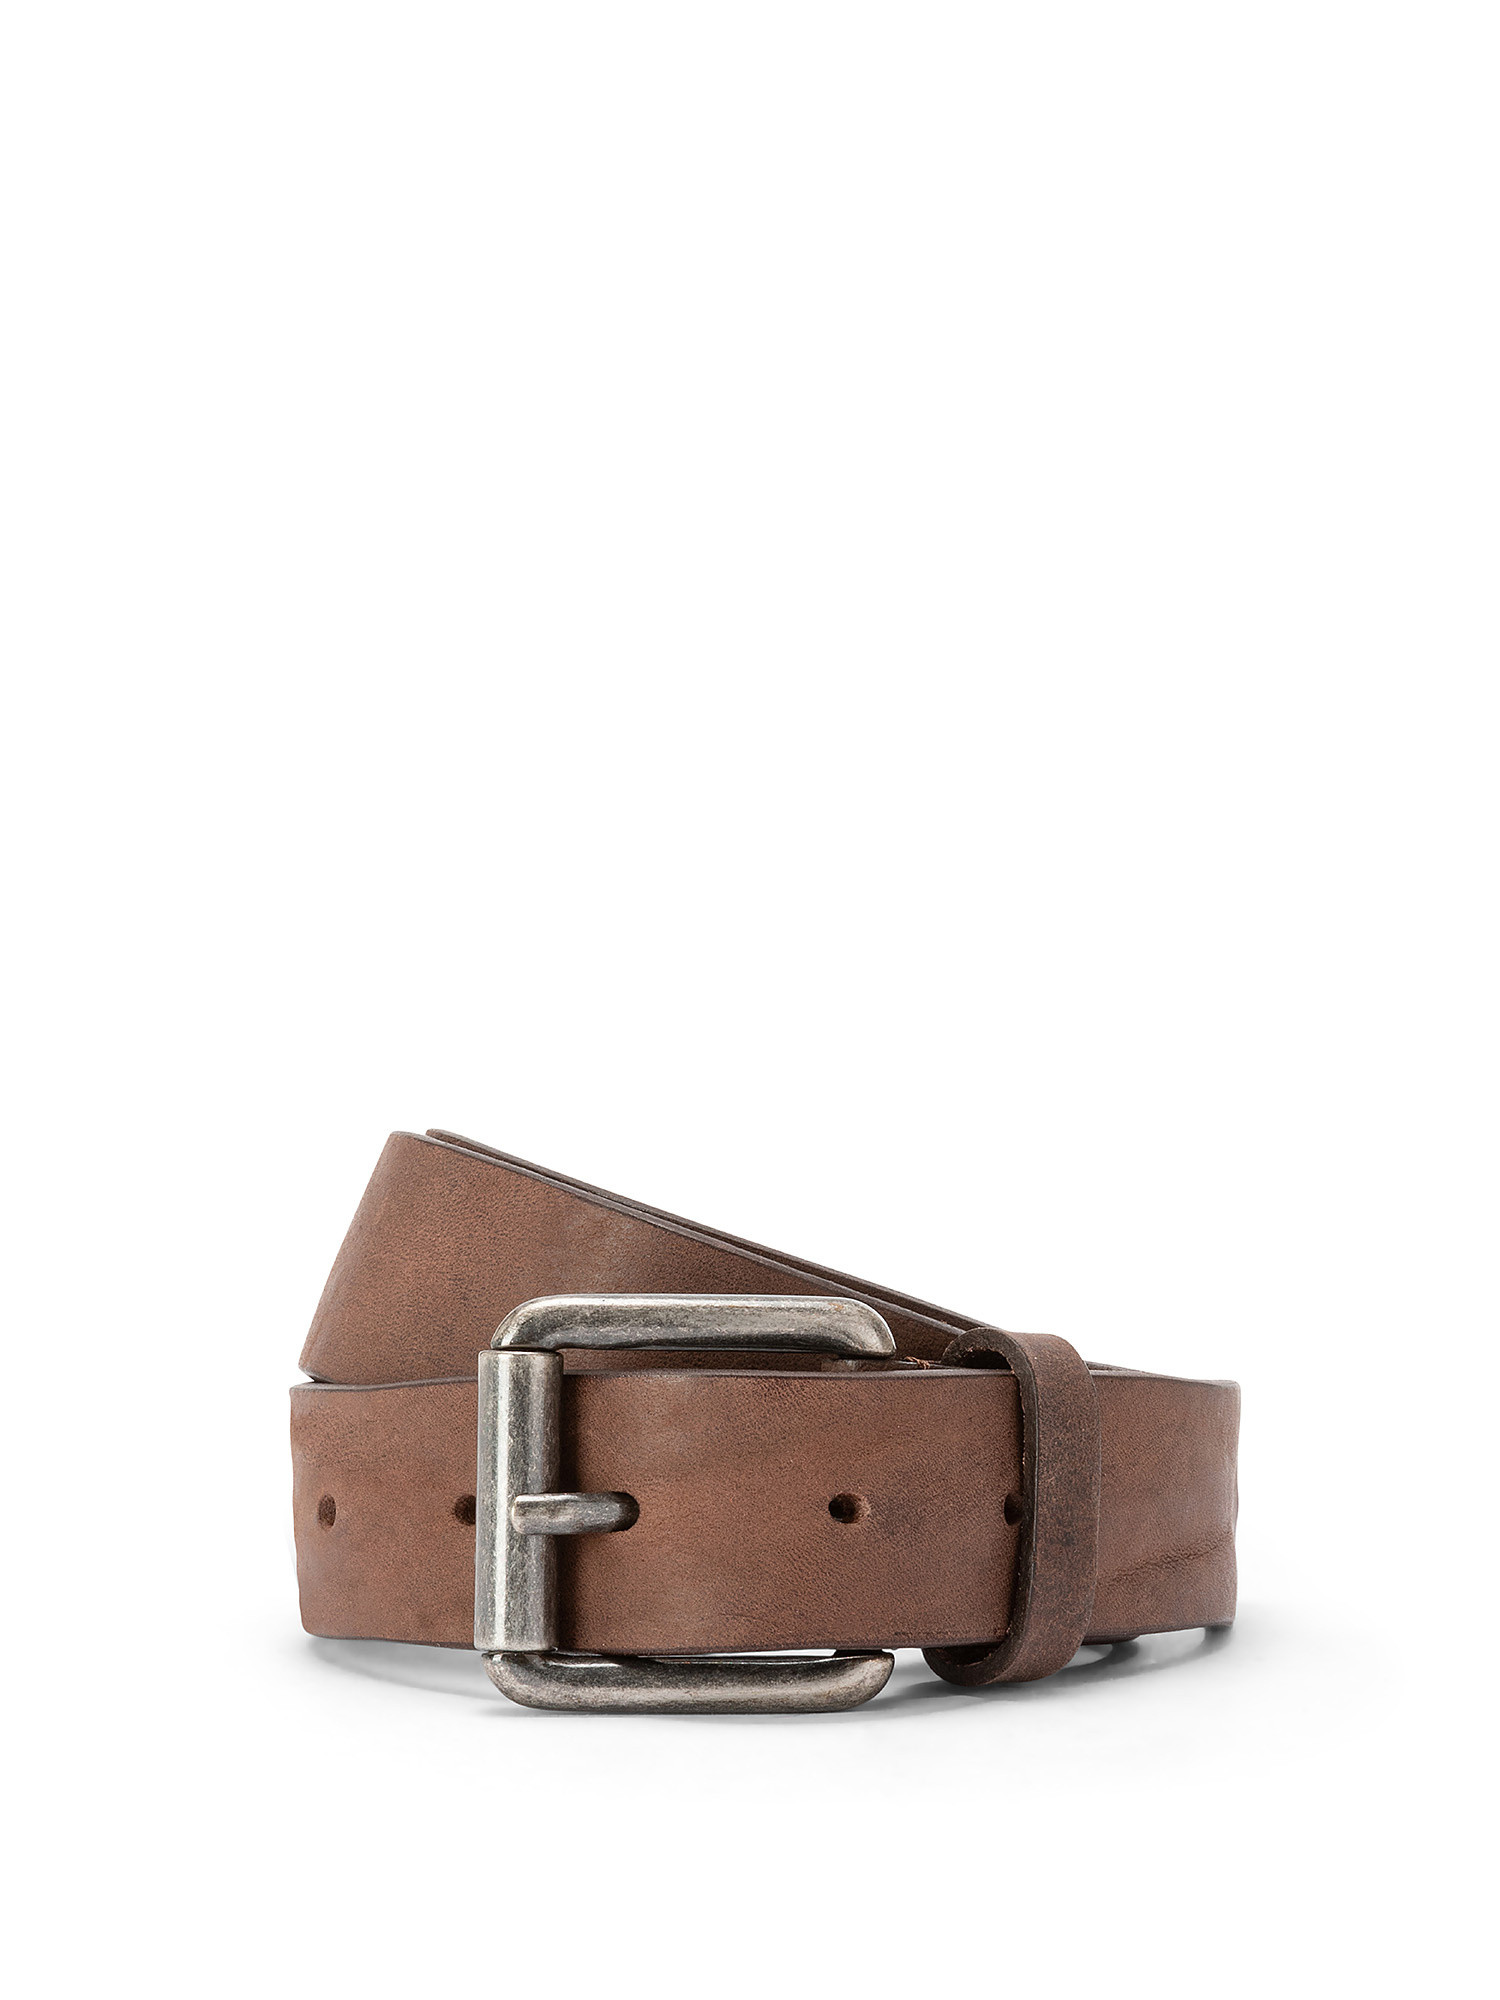 Luca D'Altieri - Leather belt, Brown, large image number 0